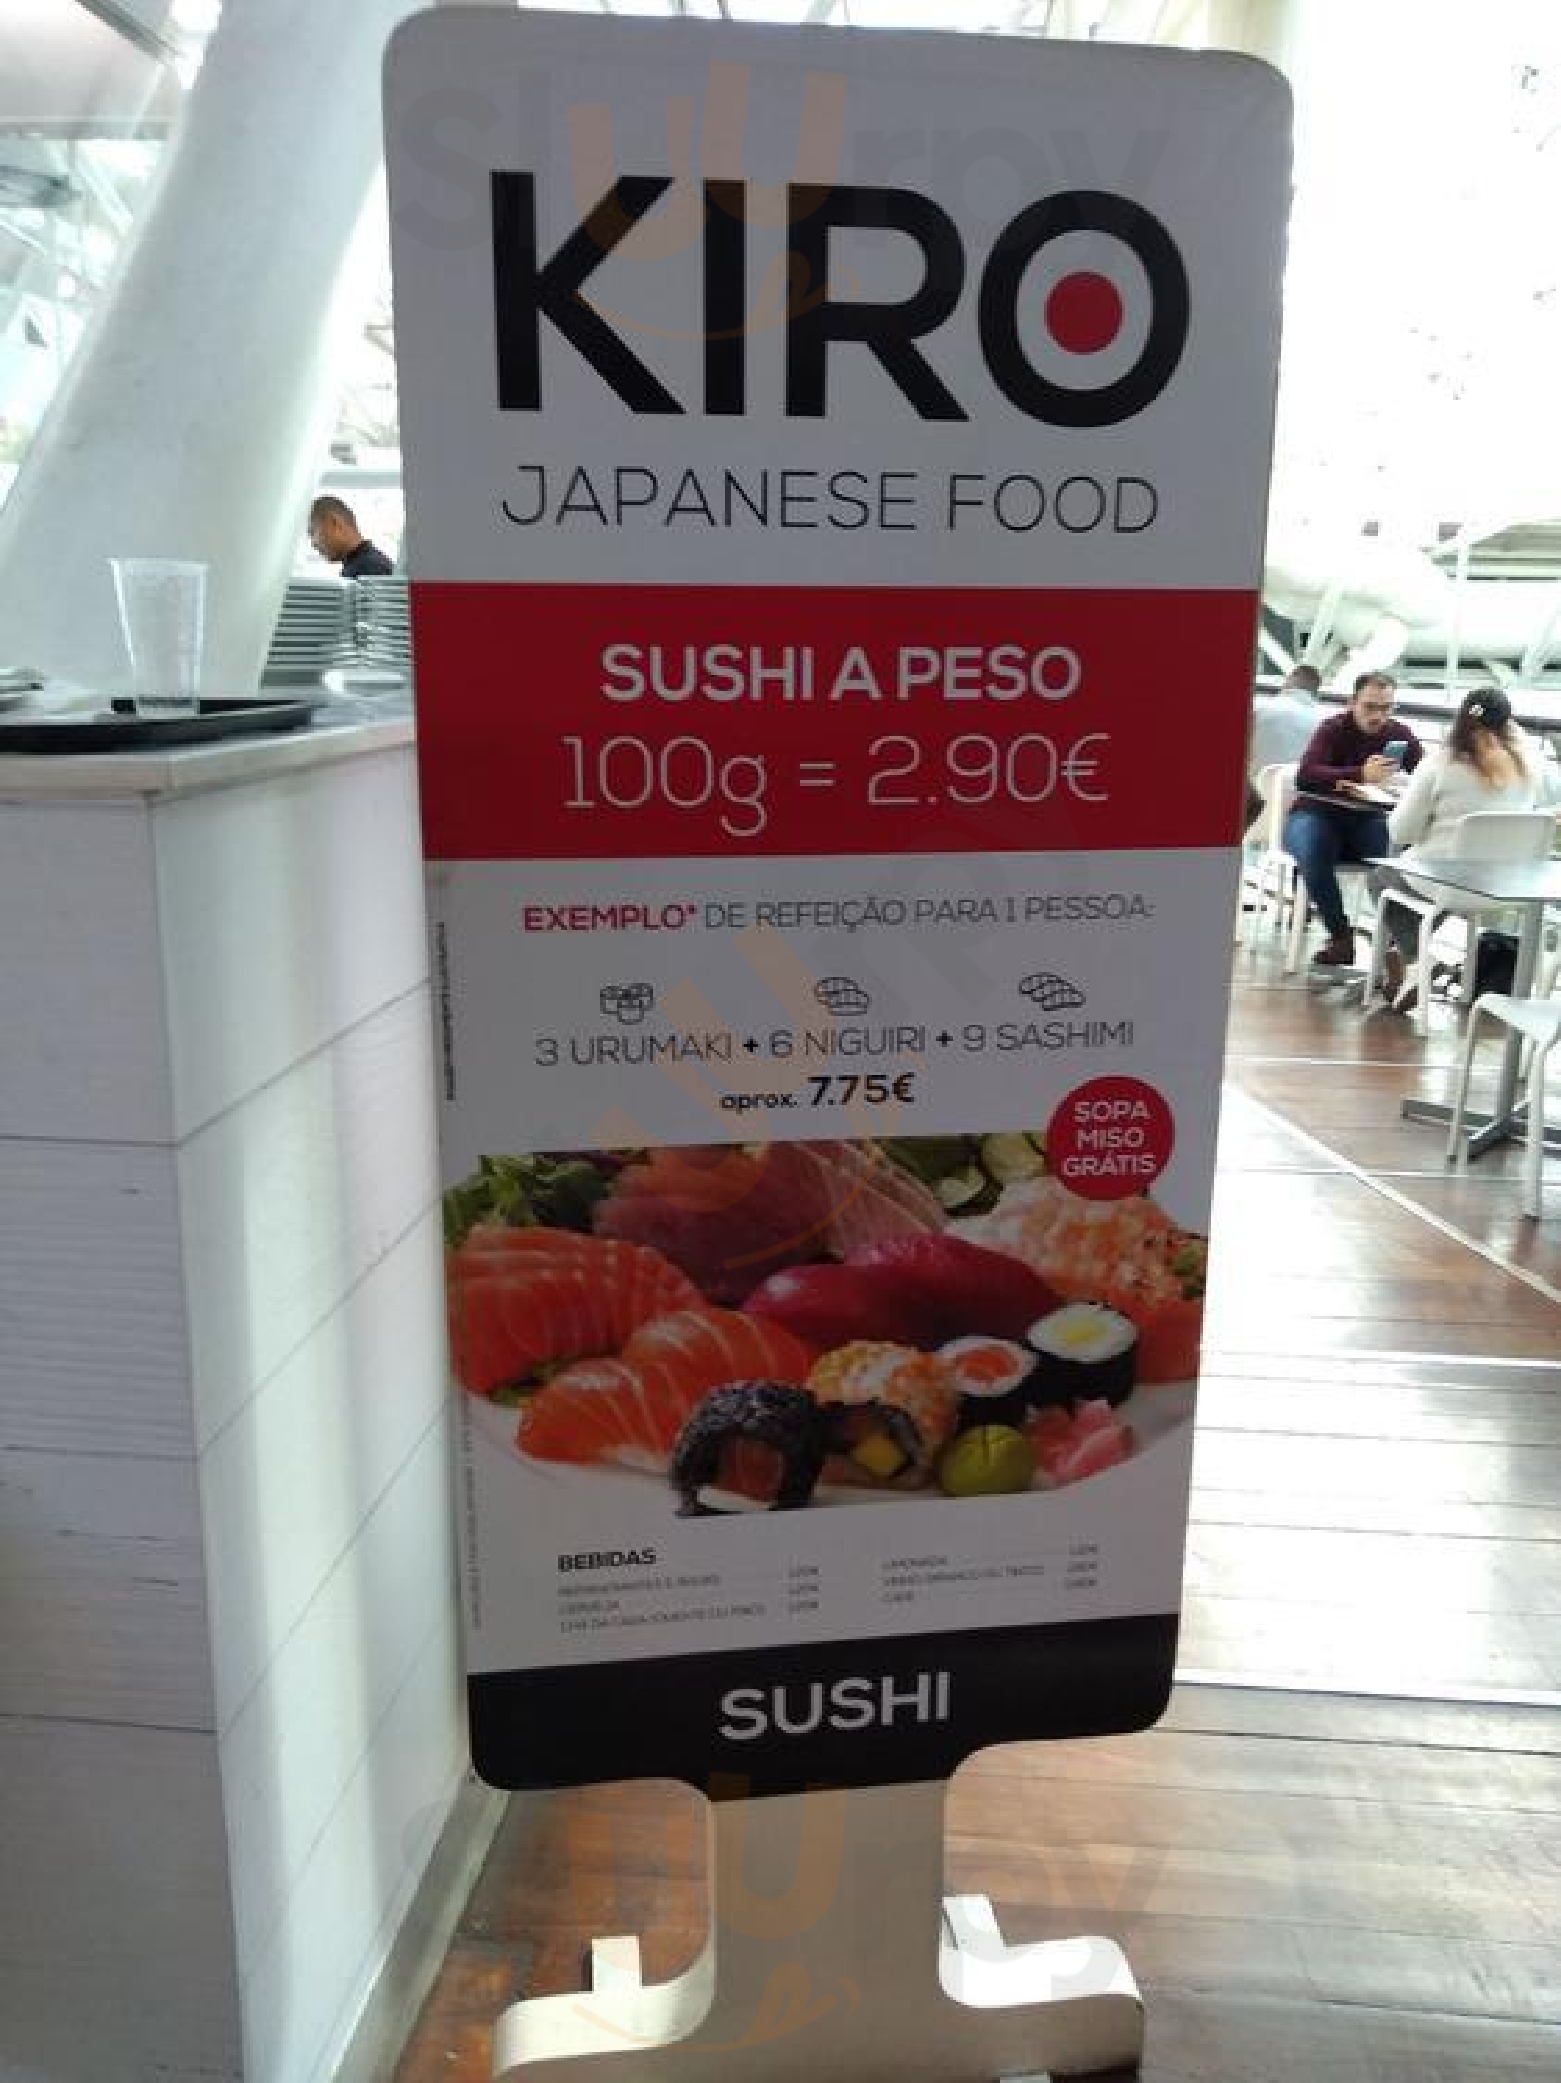 Kiro Sushi Lisboa Menu - 1